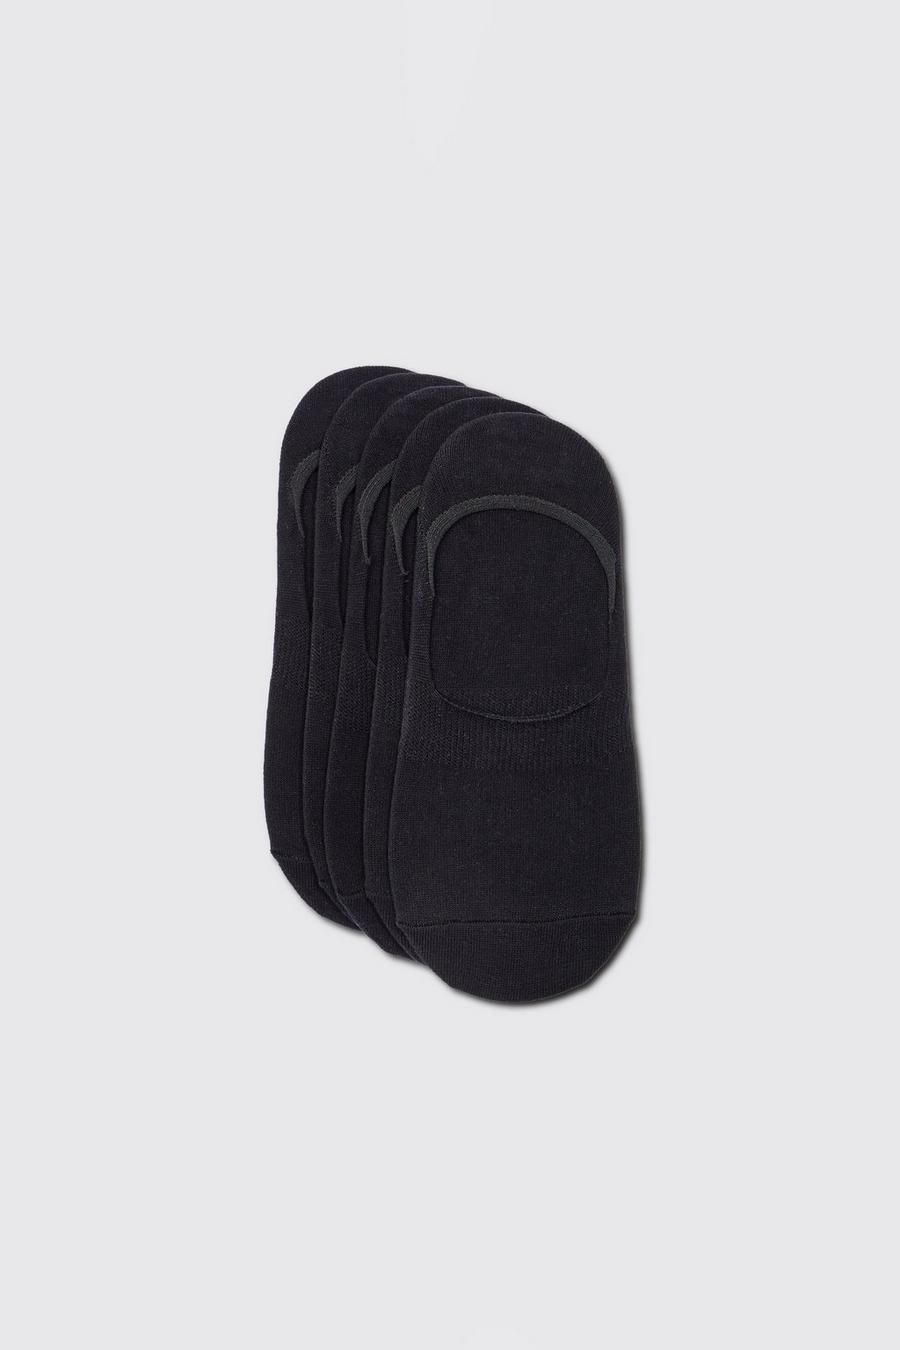 Pack de 5 pares de calcetines invisibles lisos, Black negro